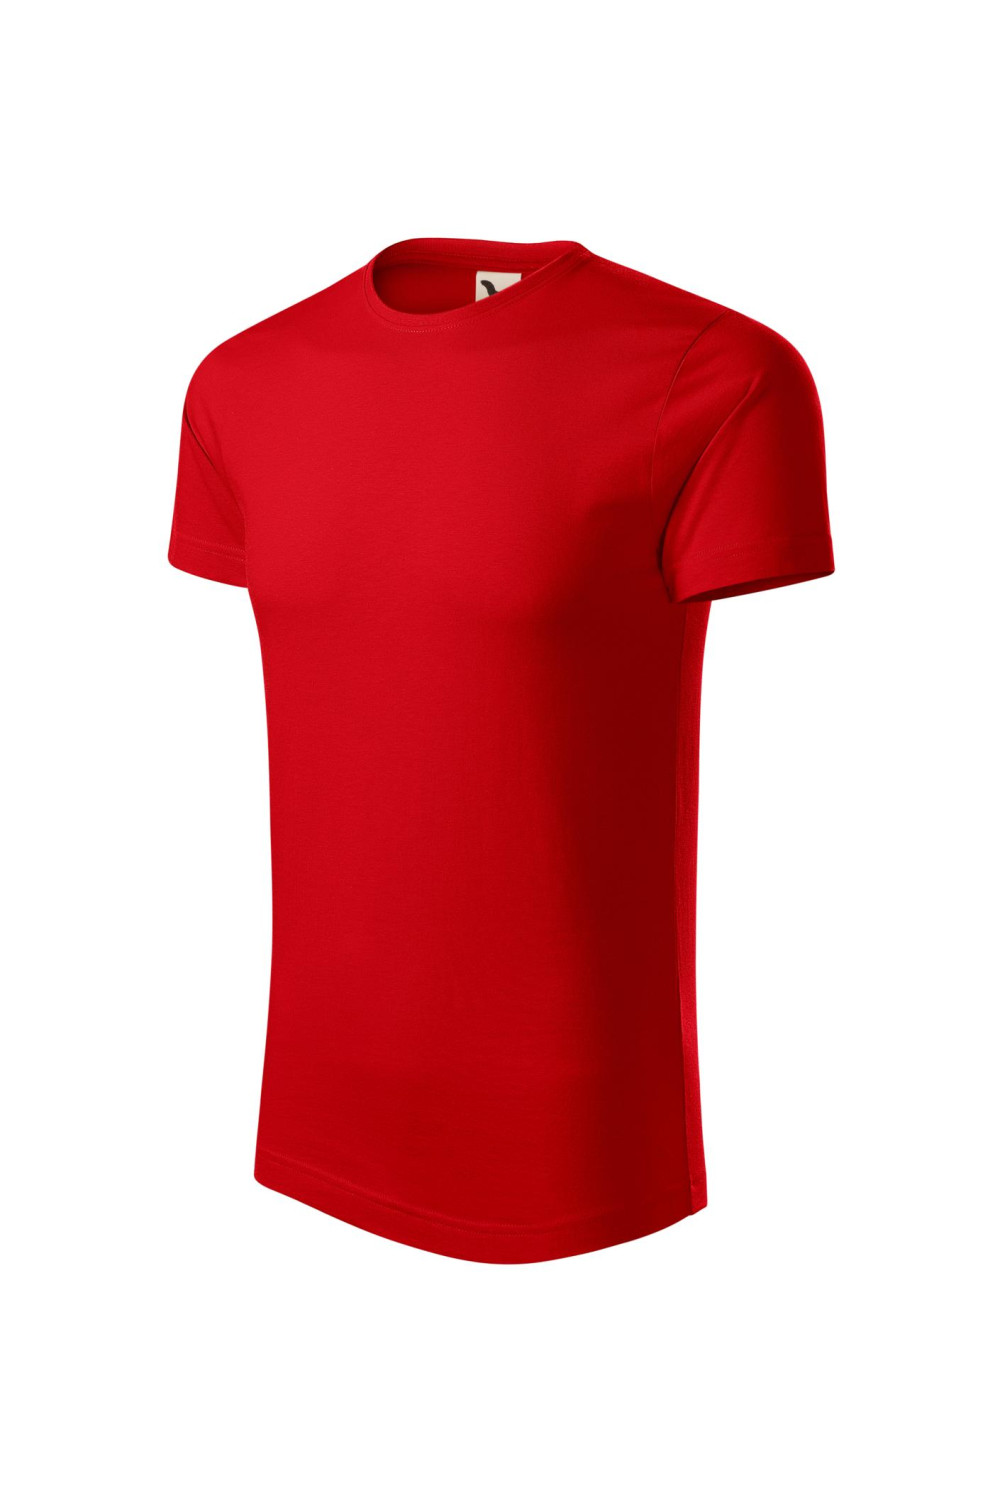 ORIGIN (GOTS) 171 MALFINI ADLER Koszulka męska t-shirt czerwony